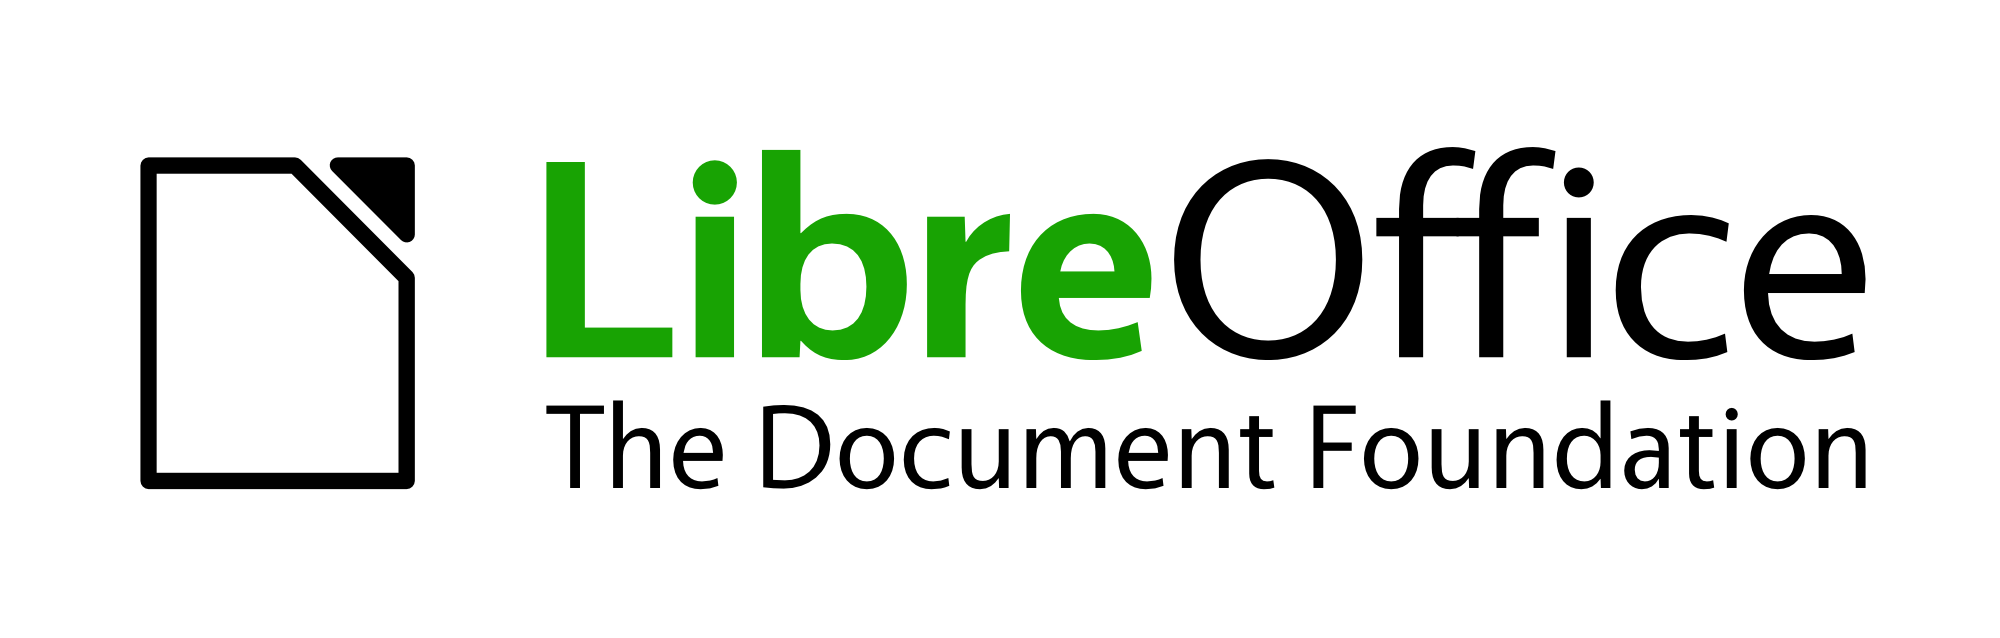 LibreOffice_Initial-Artwork-Logo_ColorLogoBasic_2000px